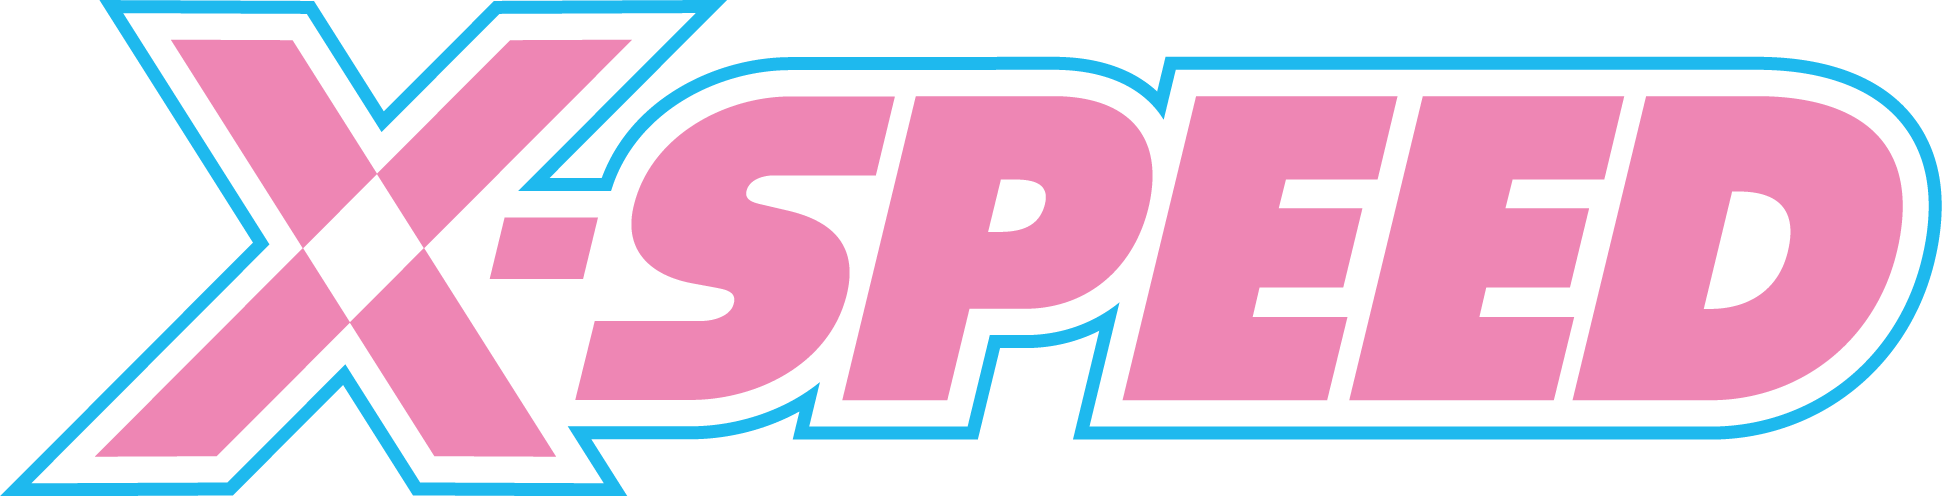 X-Speed Computer CO.,LTD Logo